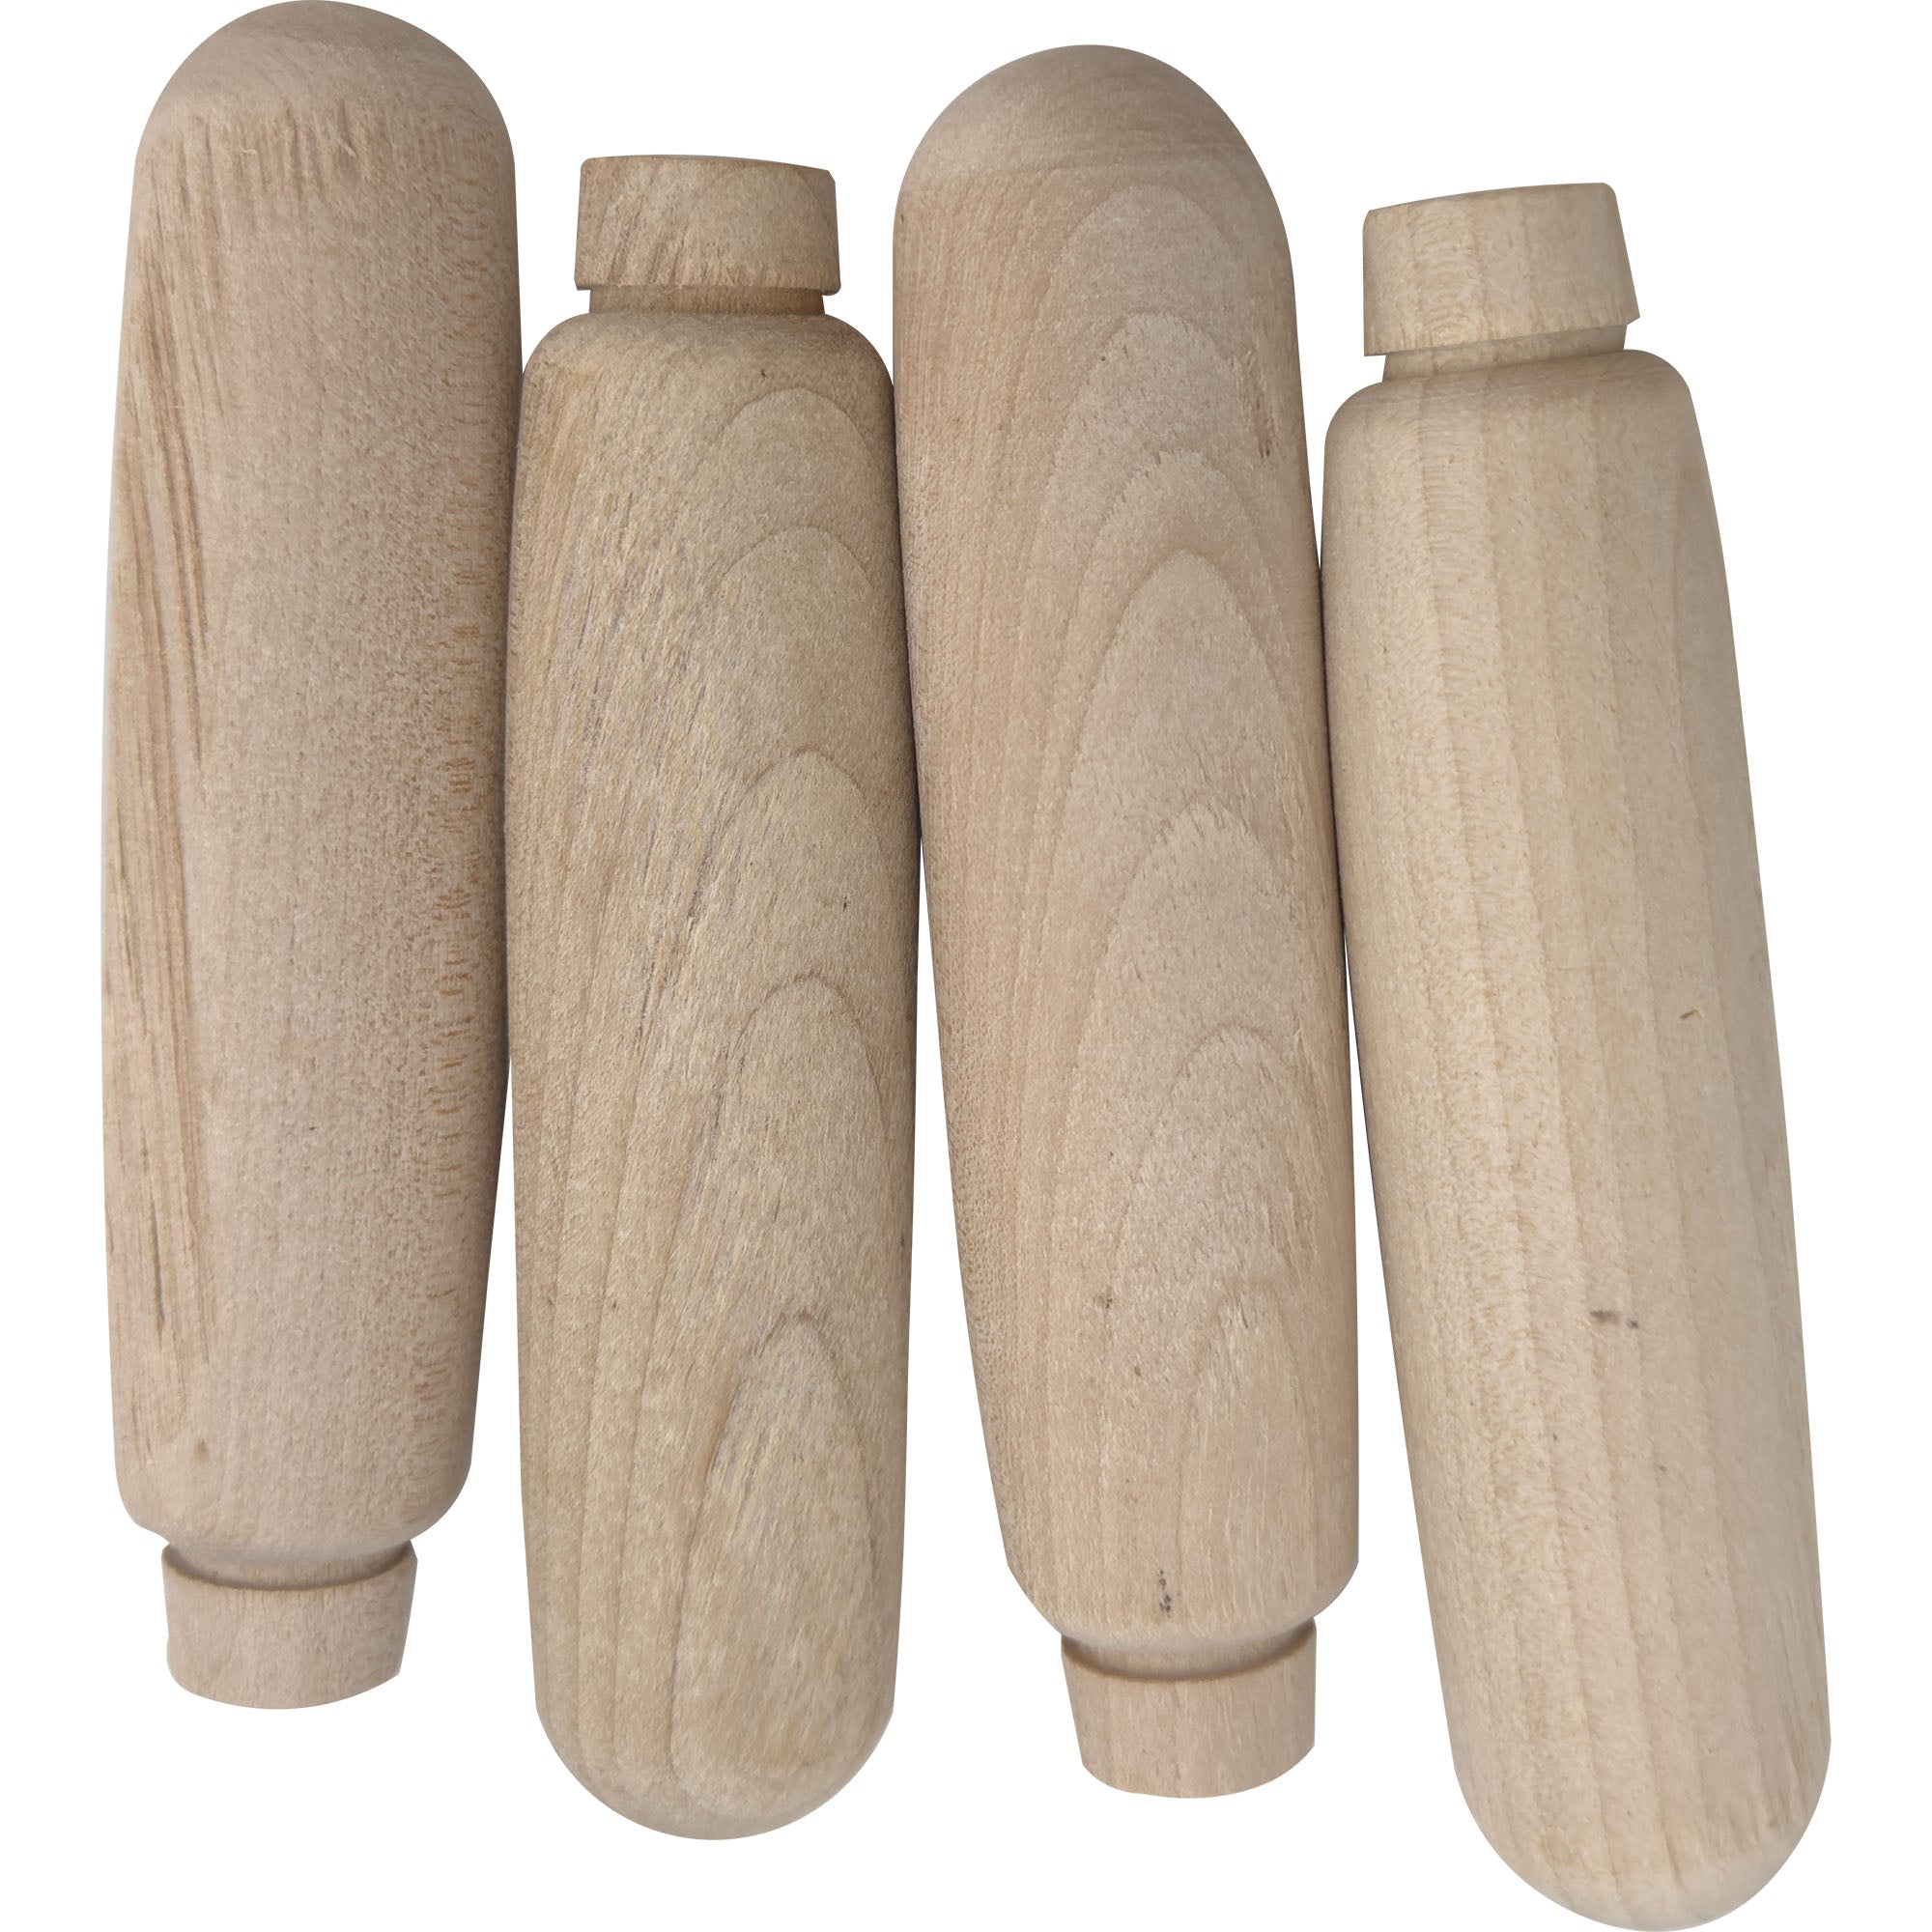 2176 Pk4 Medium Wood Handle Chewers